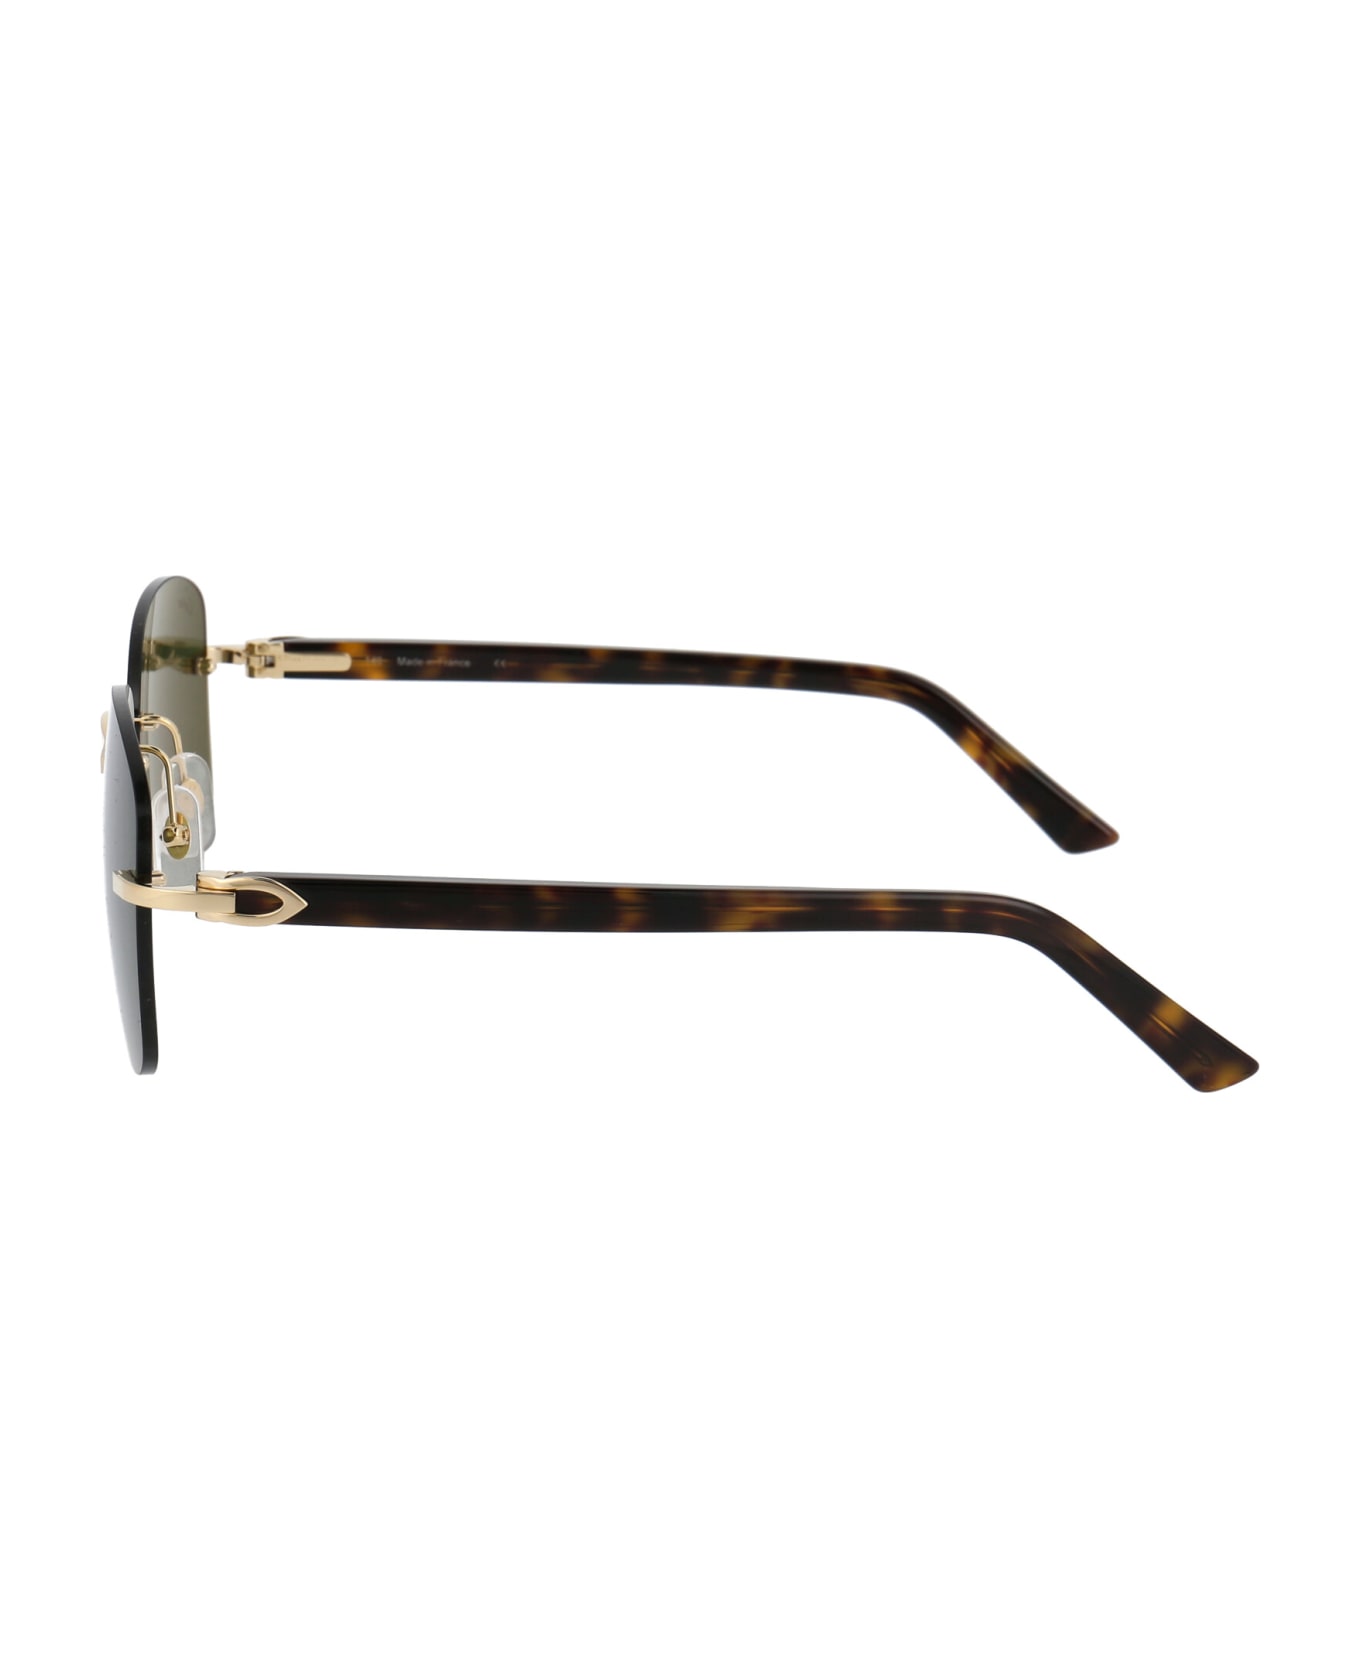 Cartier Eyewear Ct0227s Sunglasses - 002 GOLD HAVANA GREEN